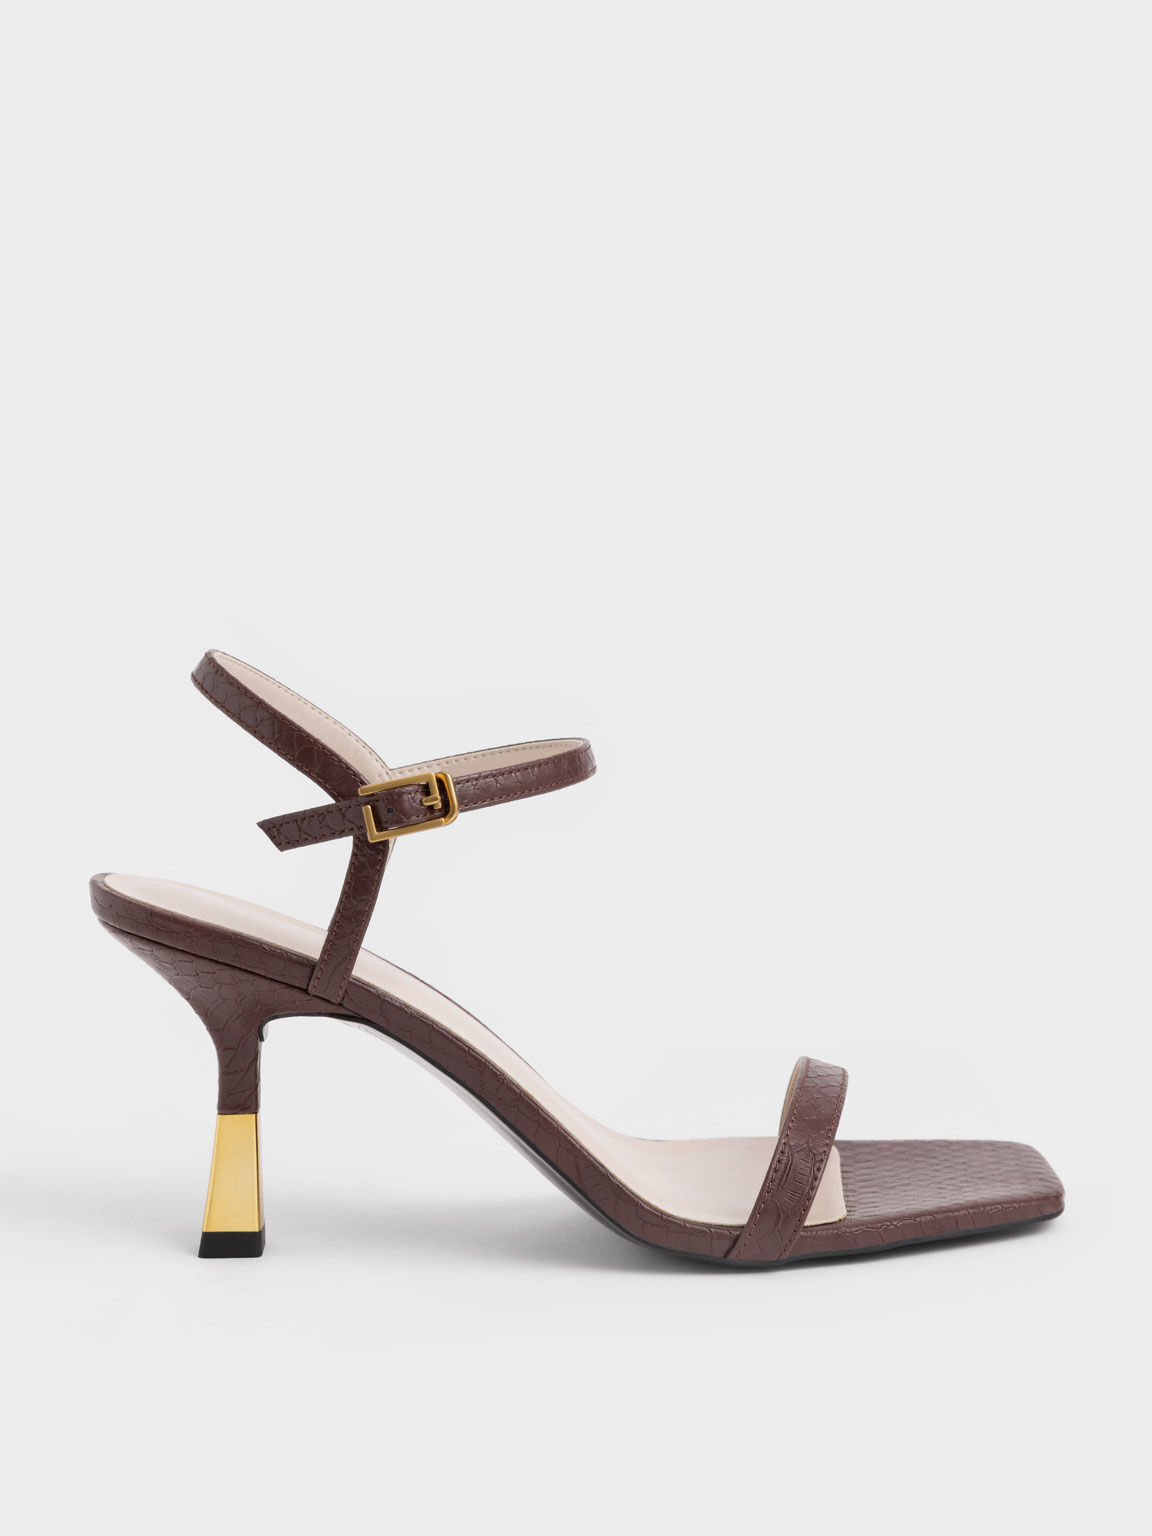 Low Heels Sandals, Brown Leather F3347W, Brenda Zaro